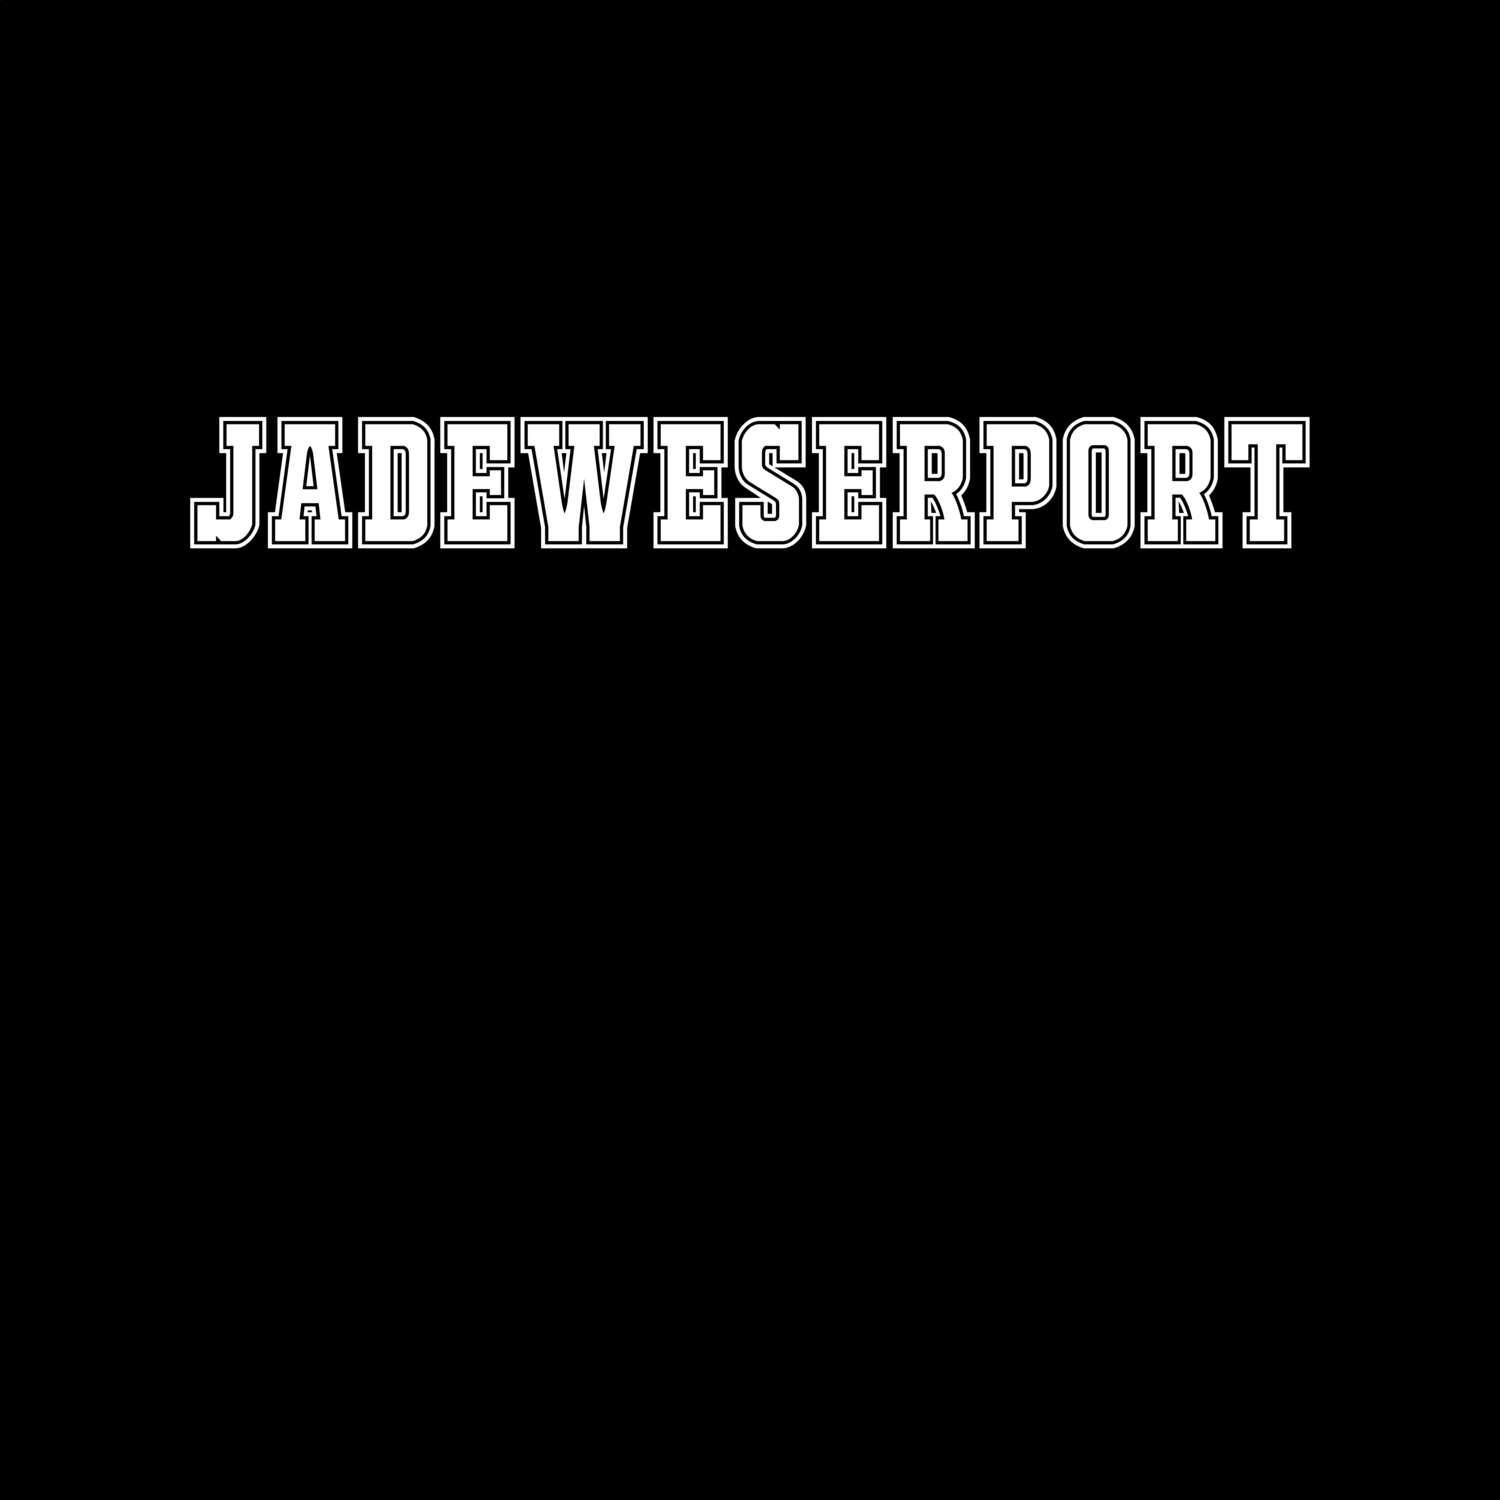 JadeWeserPort T-Shirt »Classic«